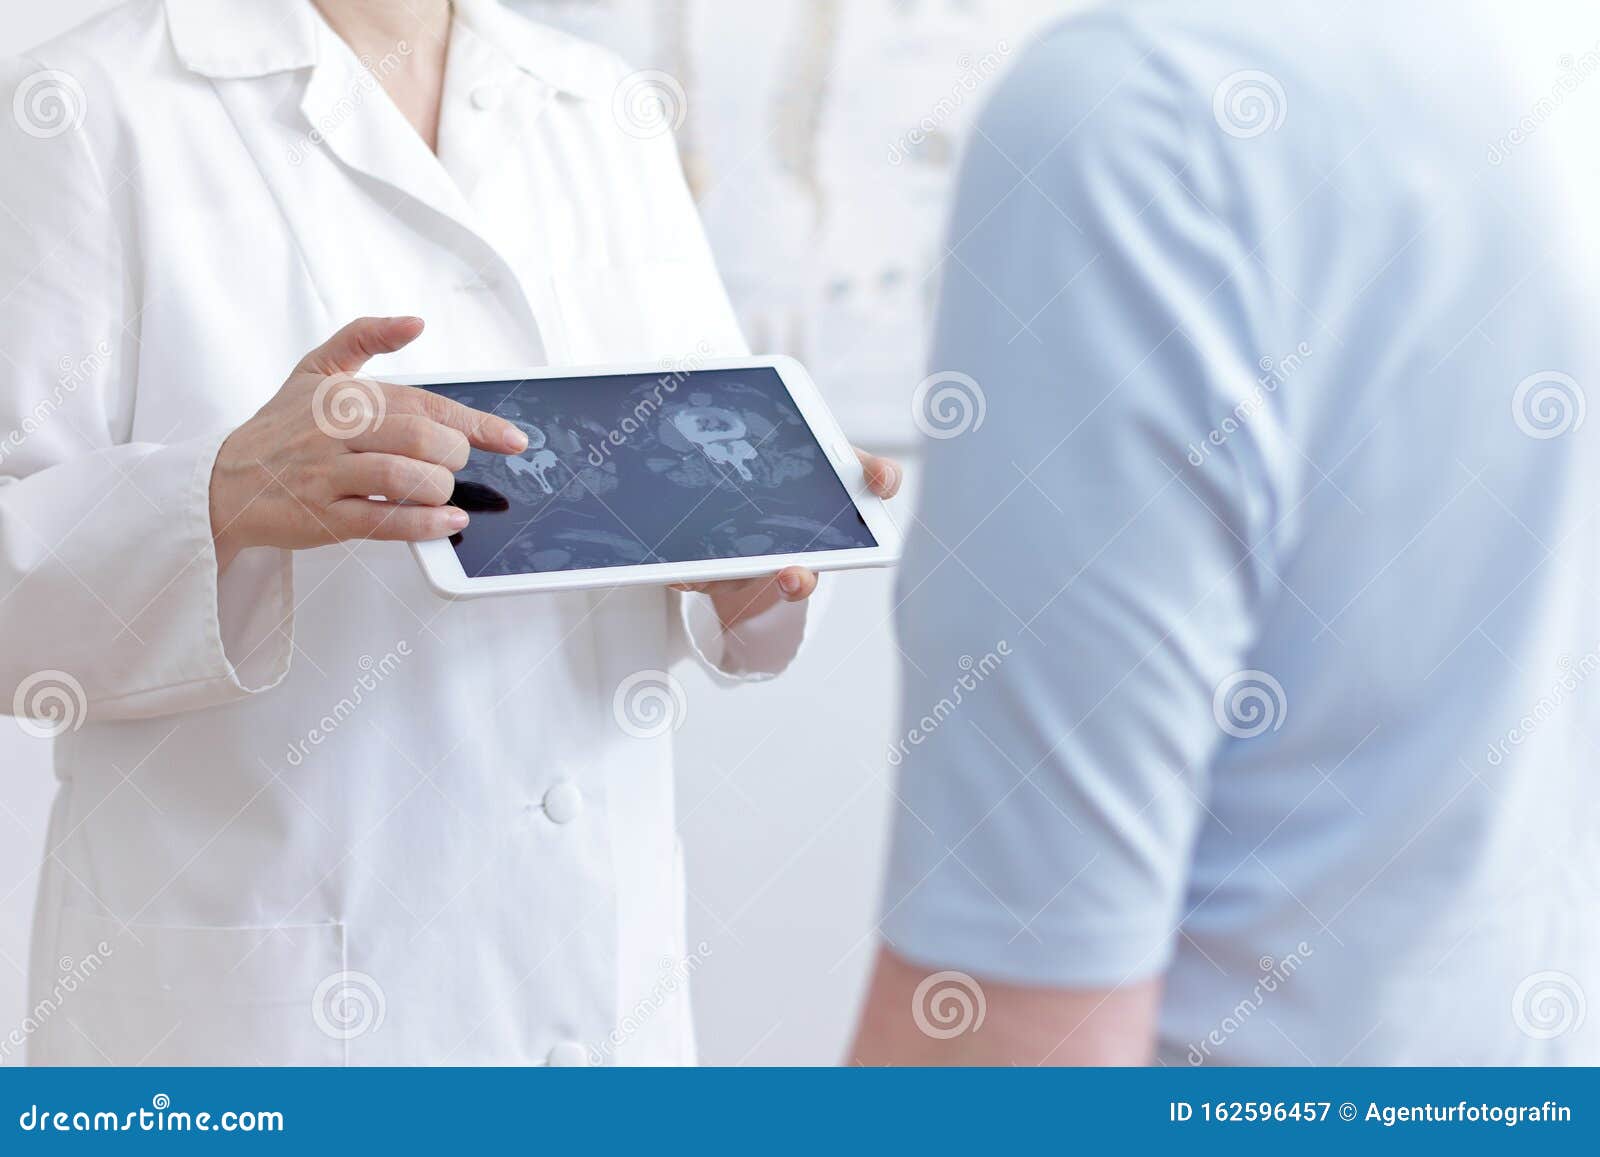 doctor patient tablet cat scan images